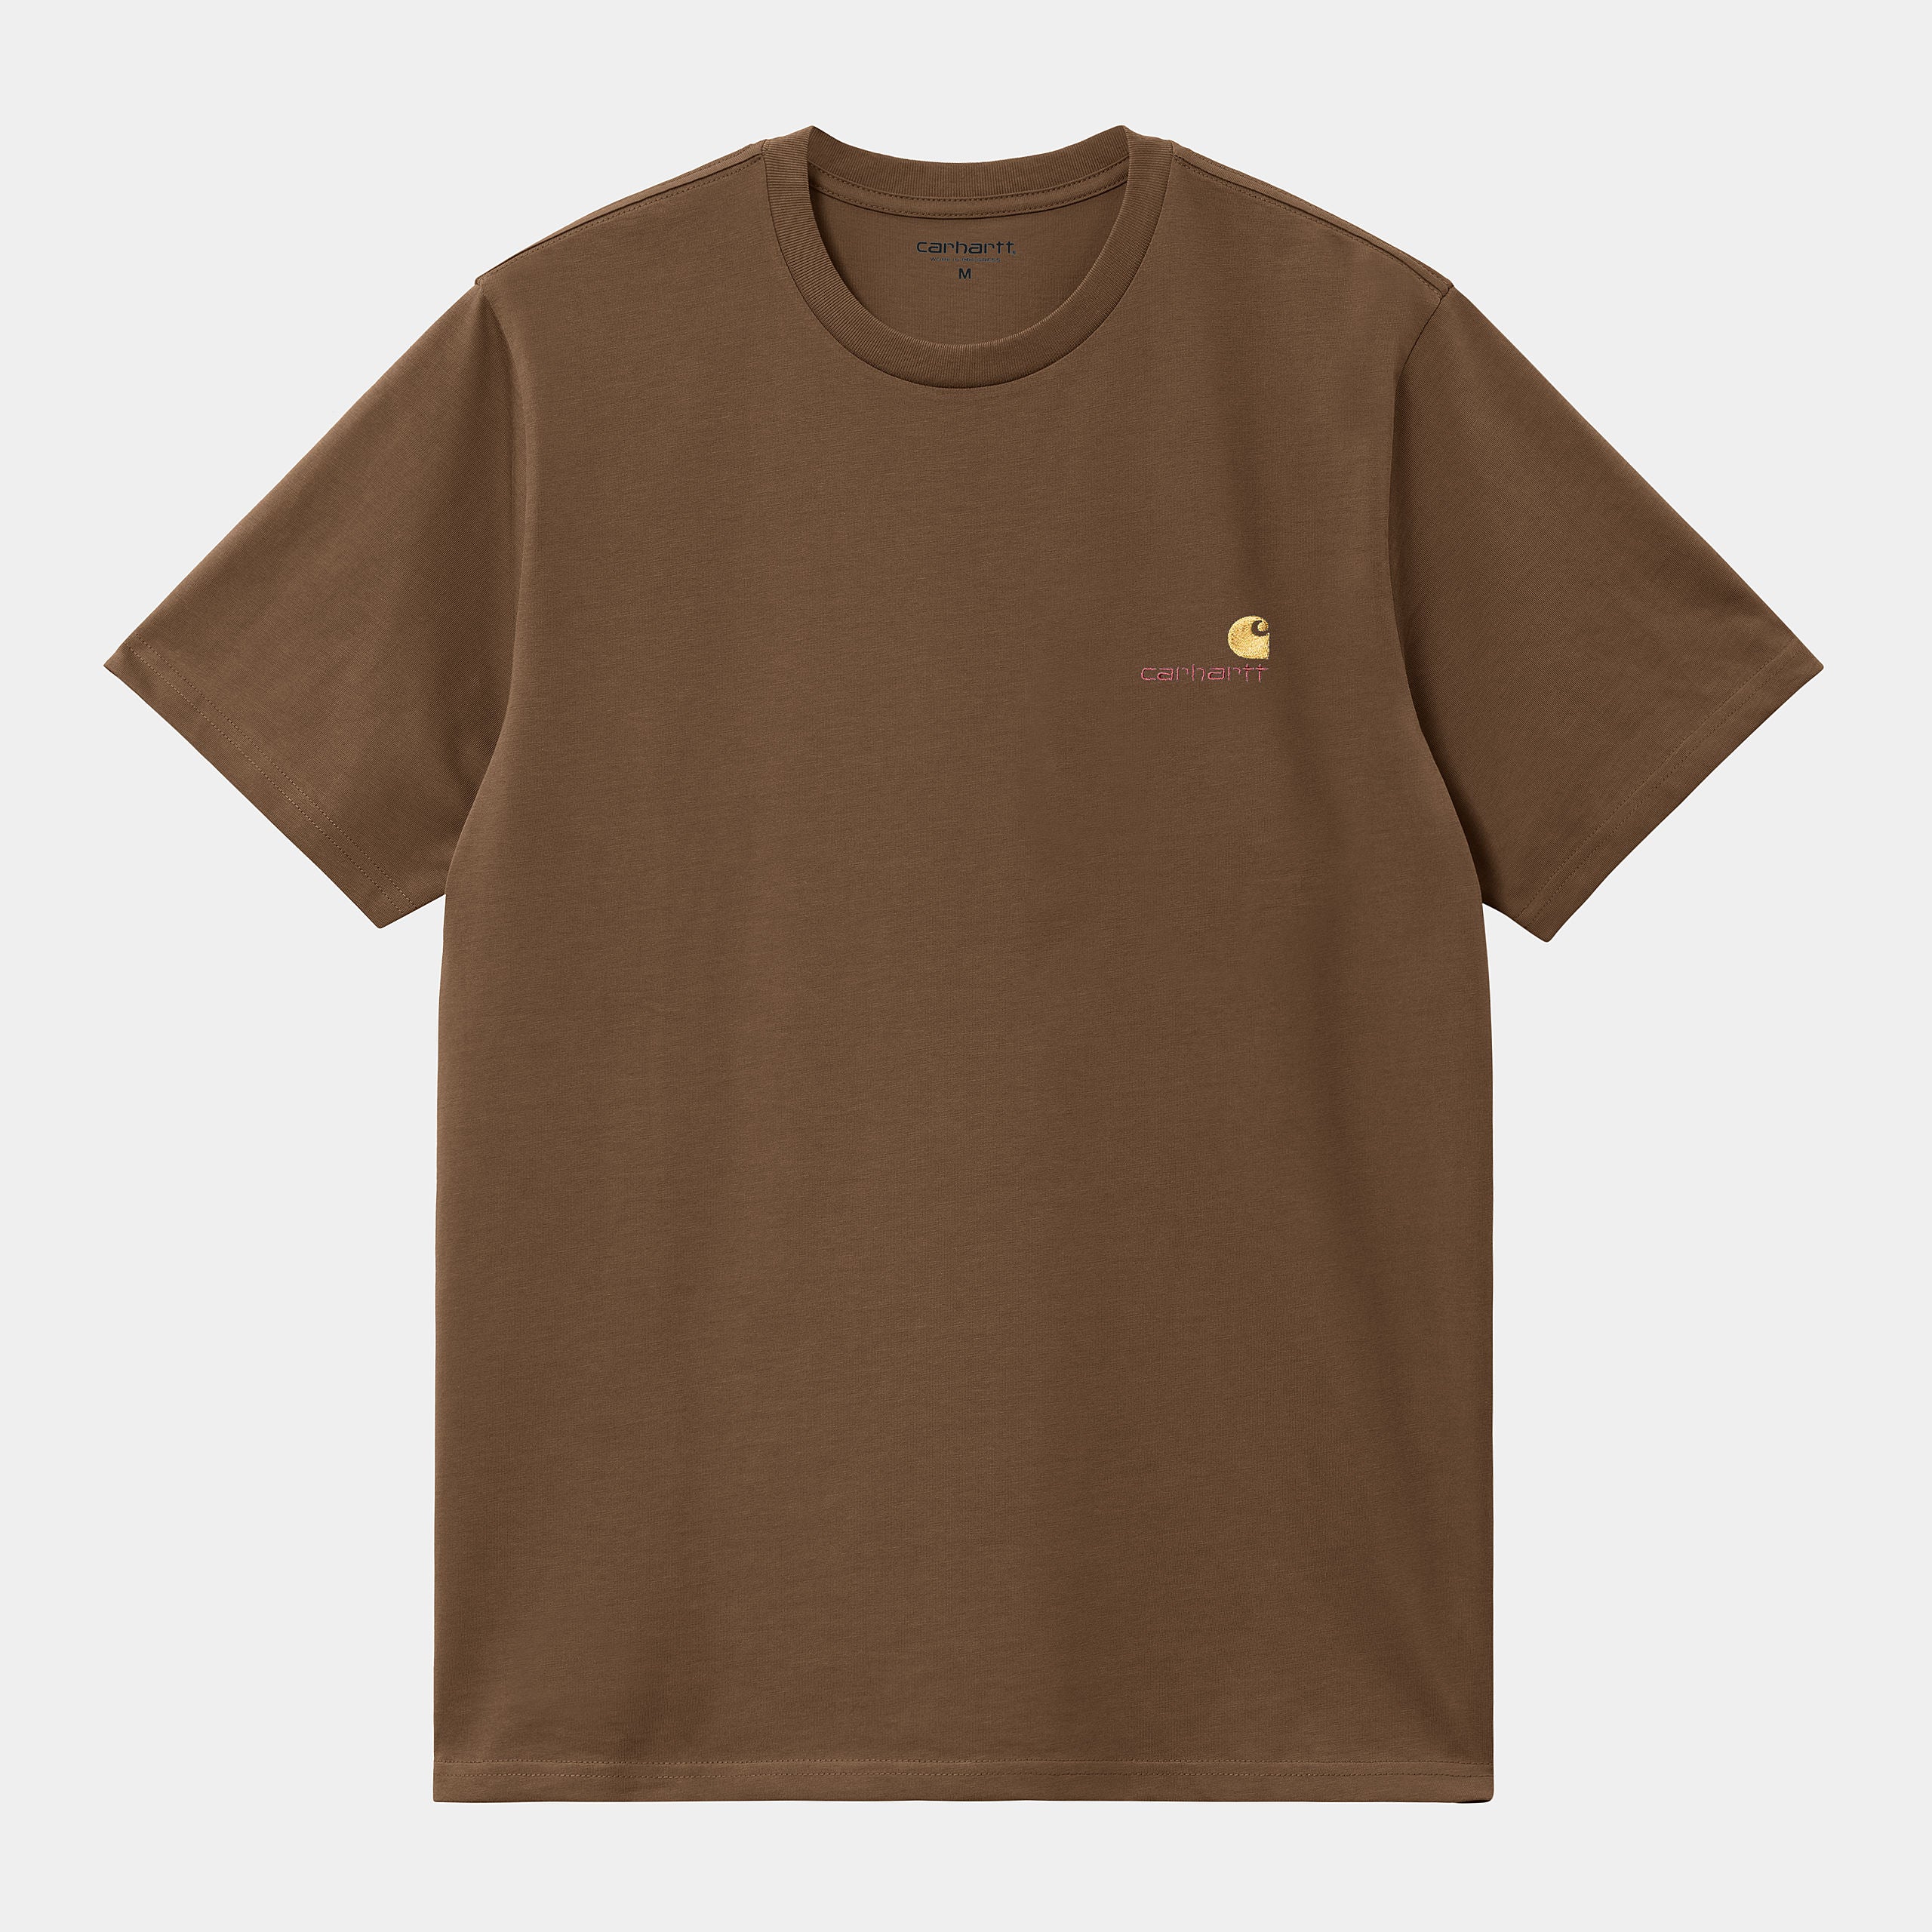 S/S American Script T-Shirt - Carhartt WIP